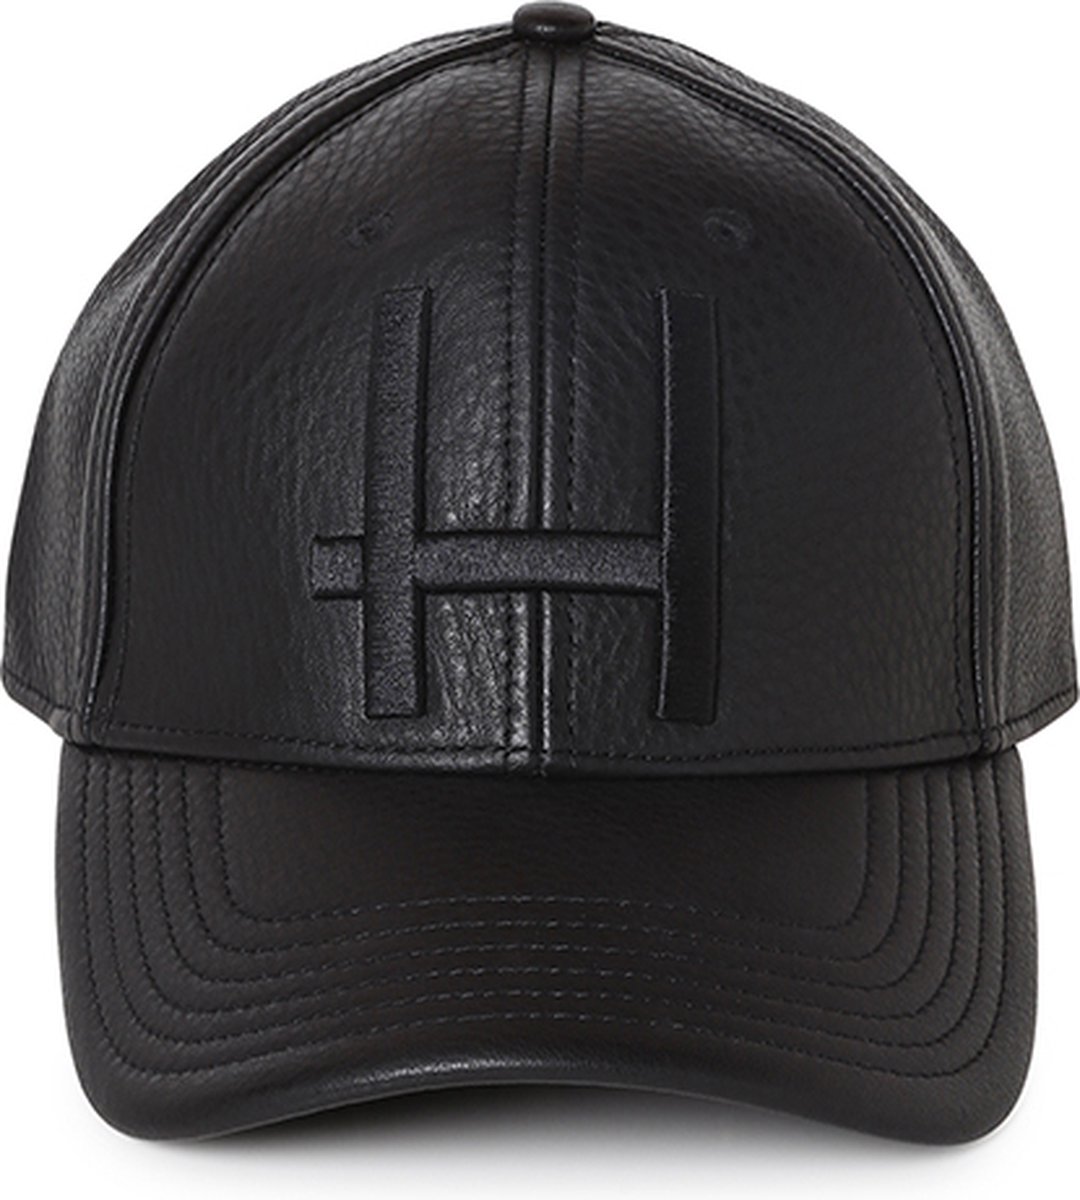 Hassing1894 model FLOWRT - cap – leather - fashionable – logo-stitching-decorated – urban cap – baseball cap – custom made – verstelbare pet – robuust - stoer - het hele jaar door - overdag en 's nachts